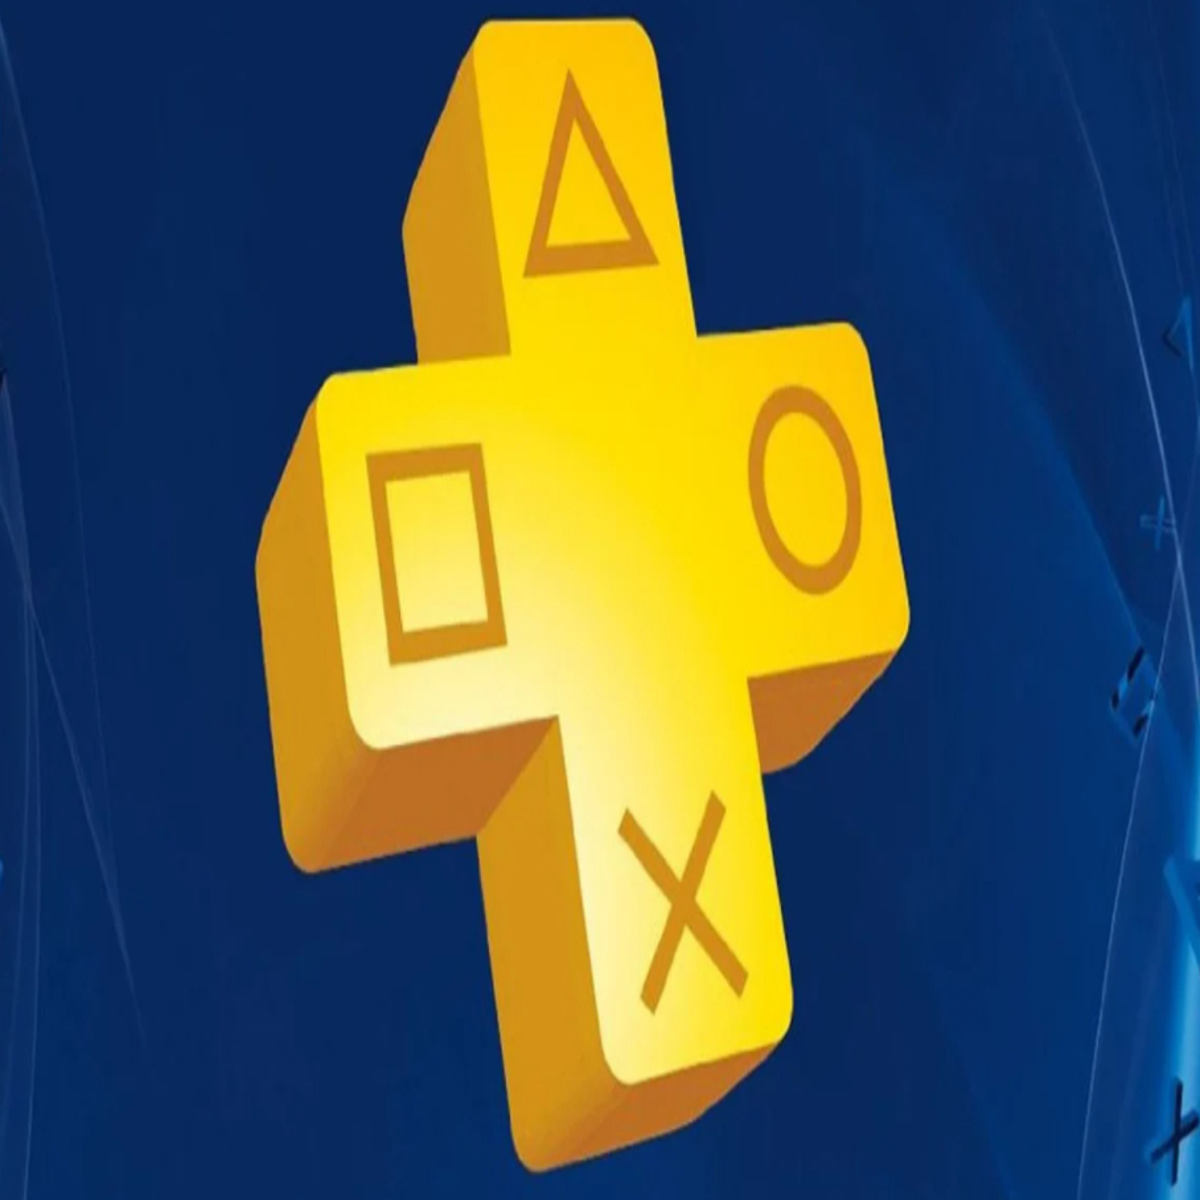 PlayStation Plus games for April: Hood: Outlaws & Legends, SpongeBob  SquarePants: Battle for Bikini Bottom – Rehydrated, Slay the Spire –  PlayStation.Blog